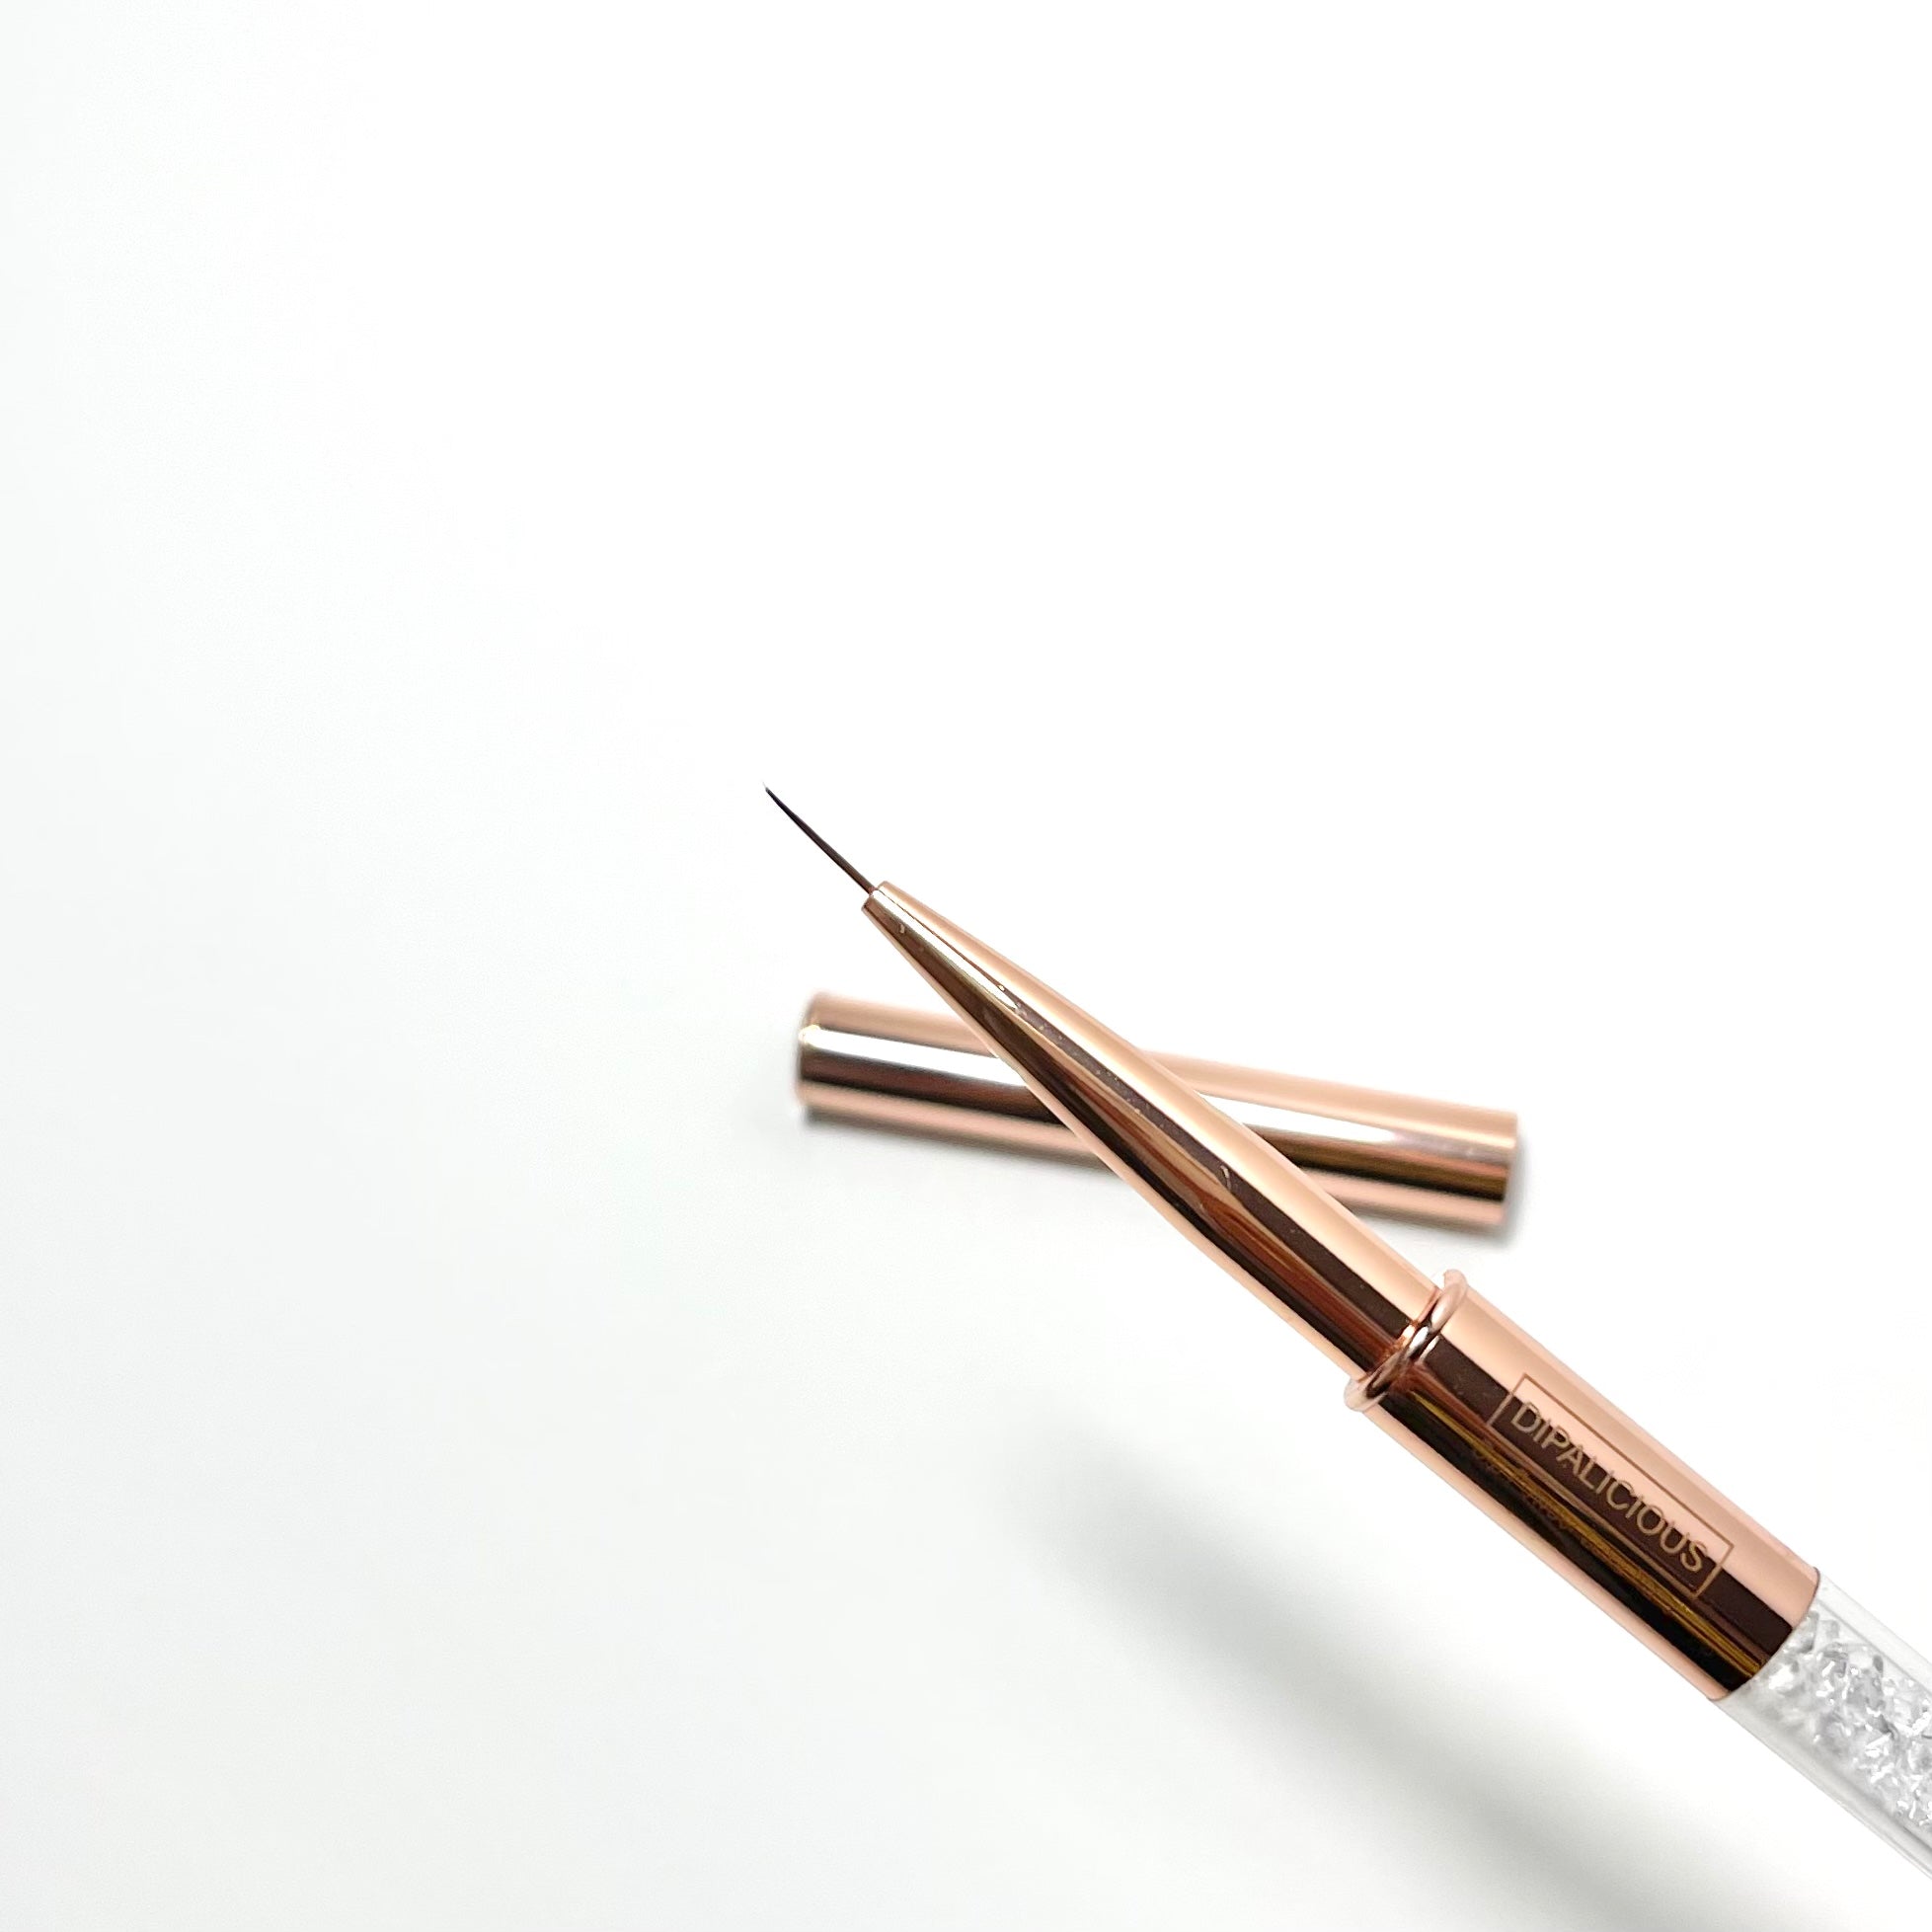 9 mm LINER brush – NAILZ BY DEV